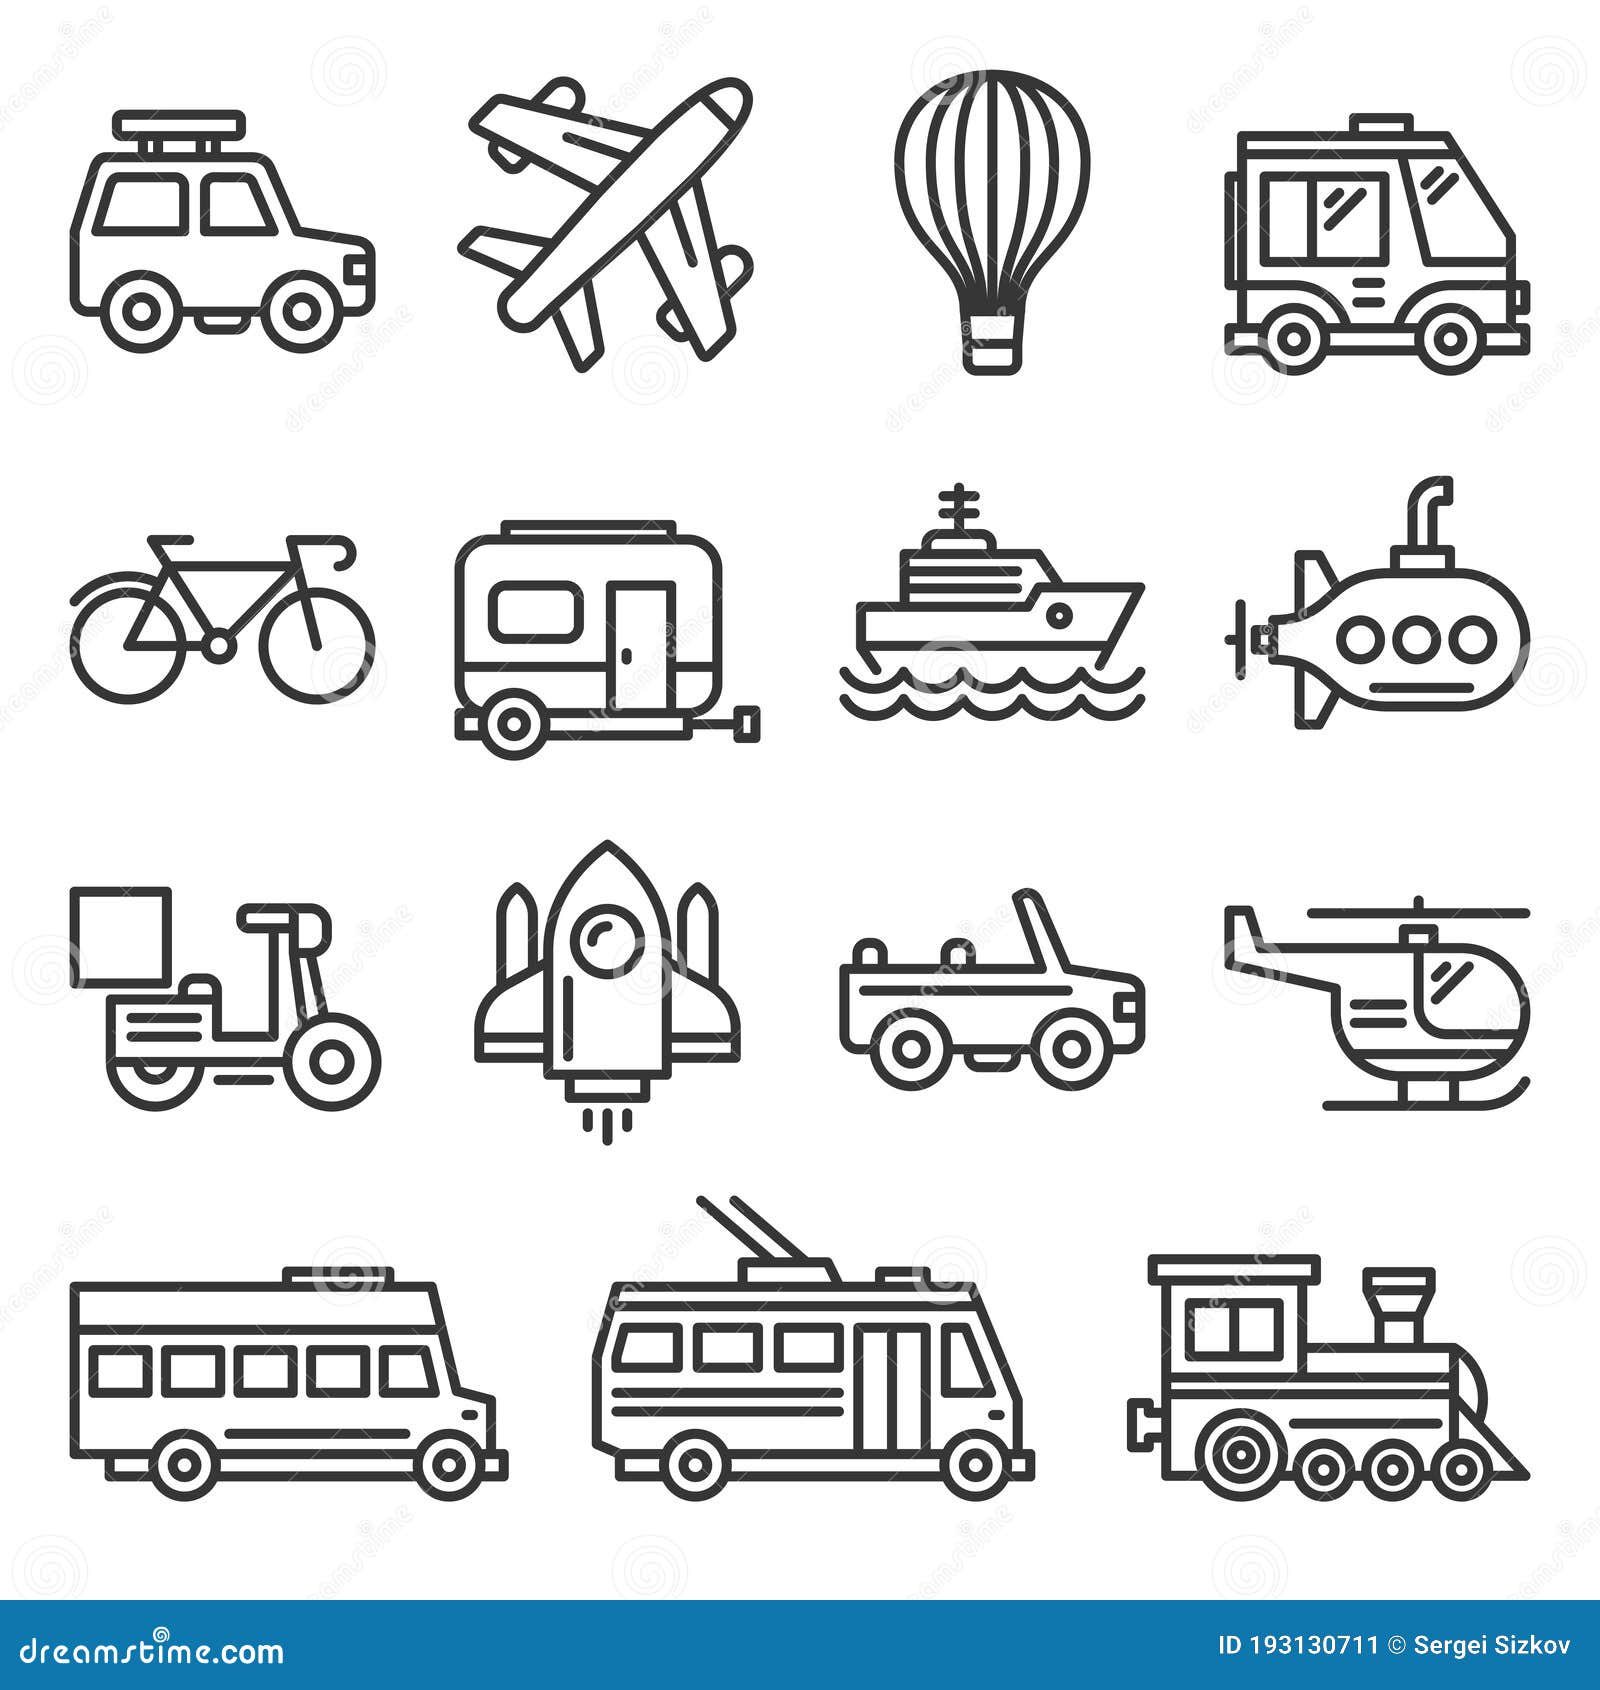 Public Transportation and Transport Icons Set on White Background. Line ...